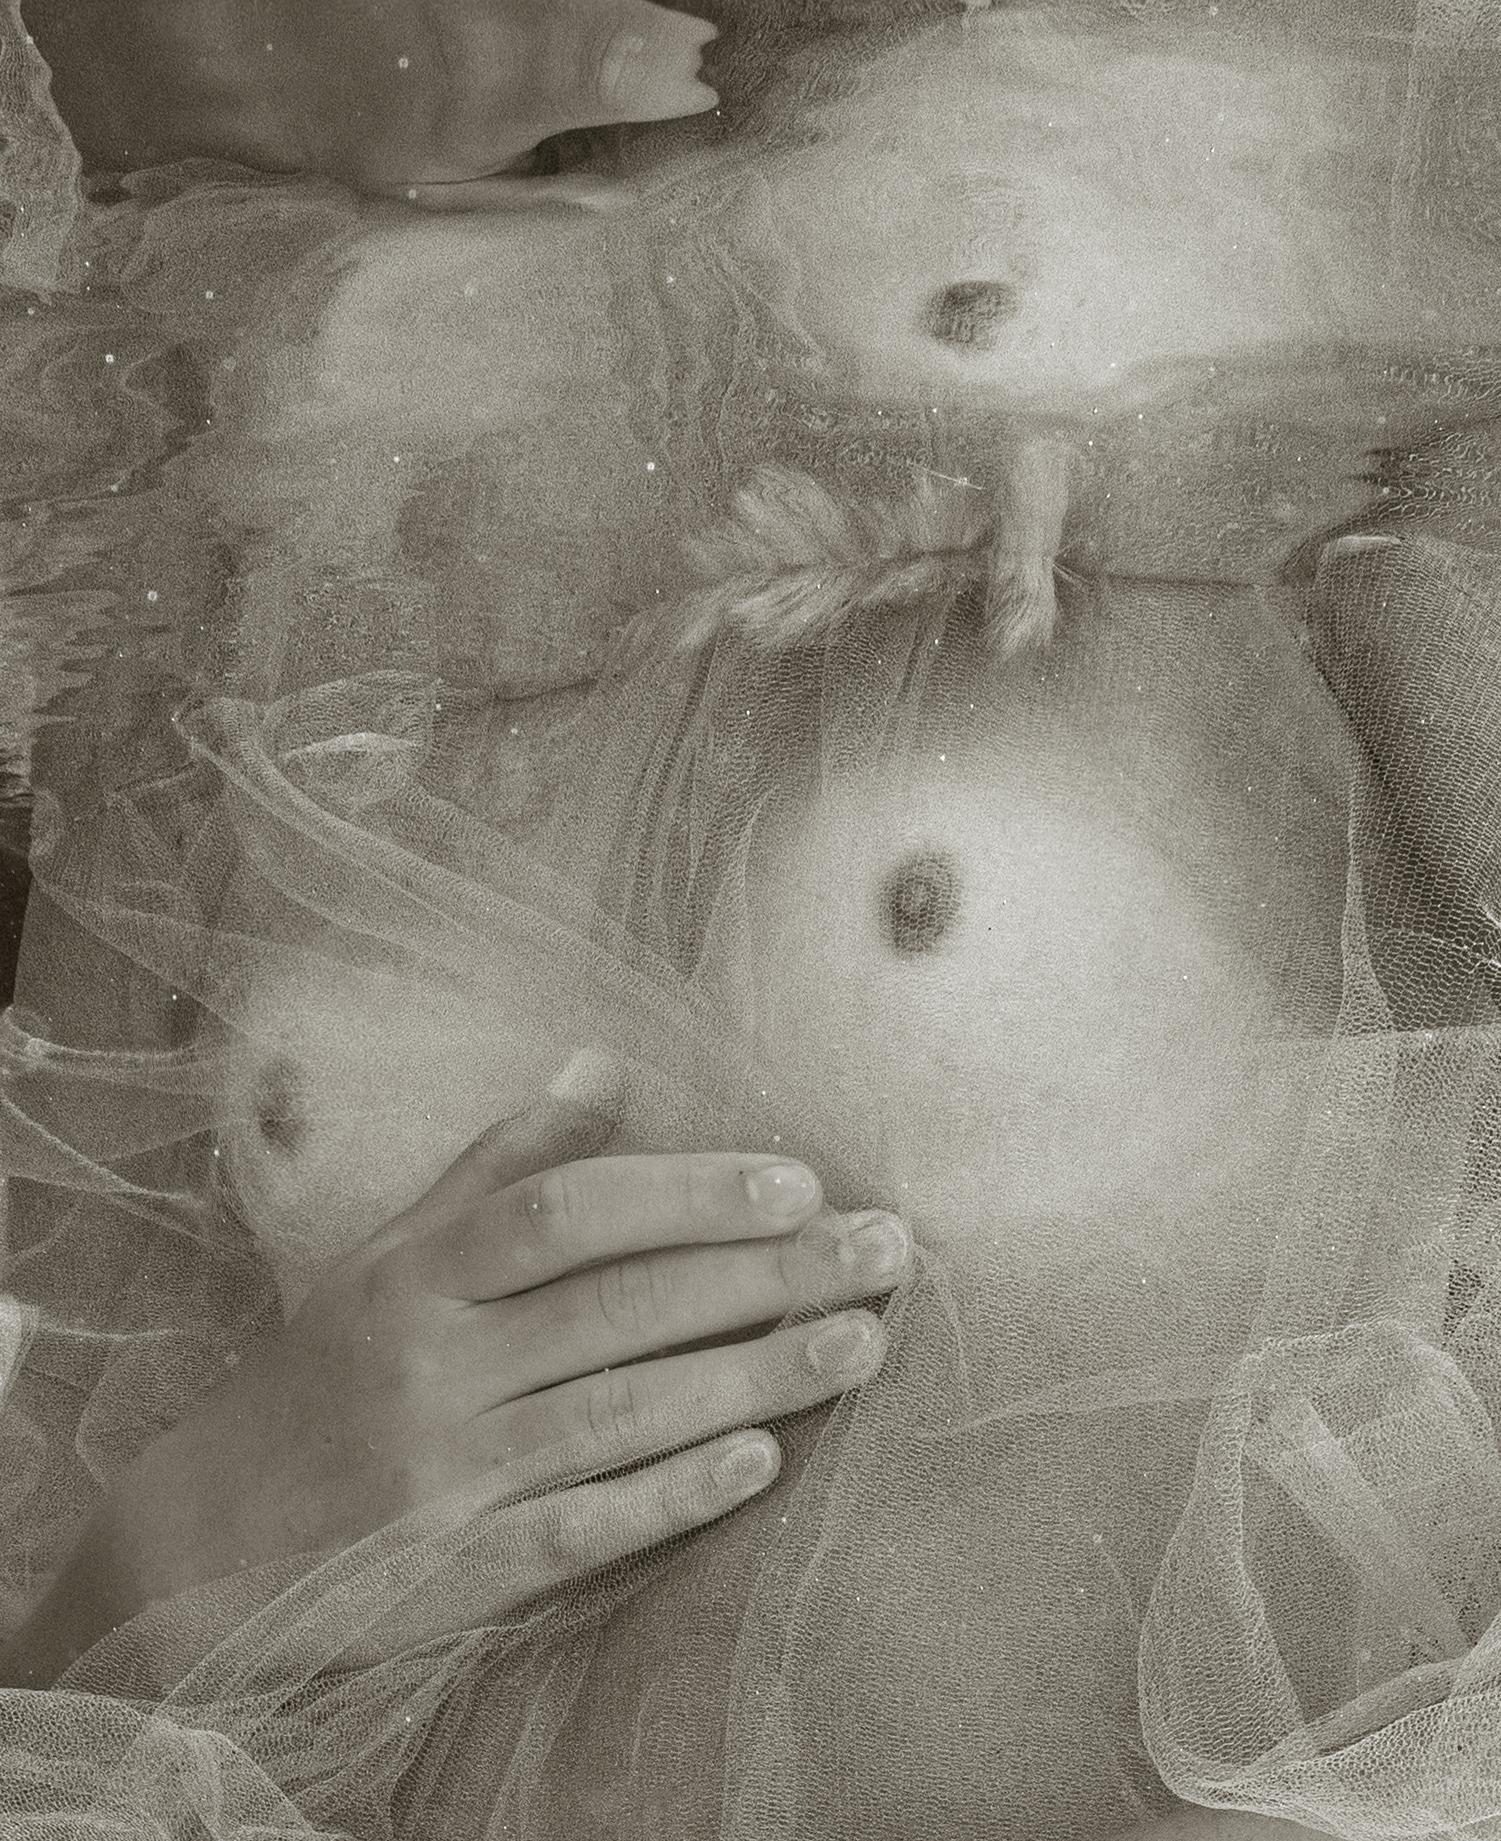 Bride - underwater black & white nude photograph - archival pigment print 35x28